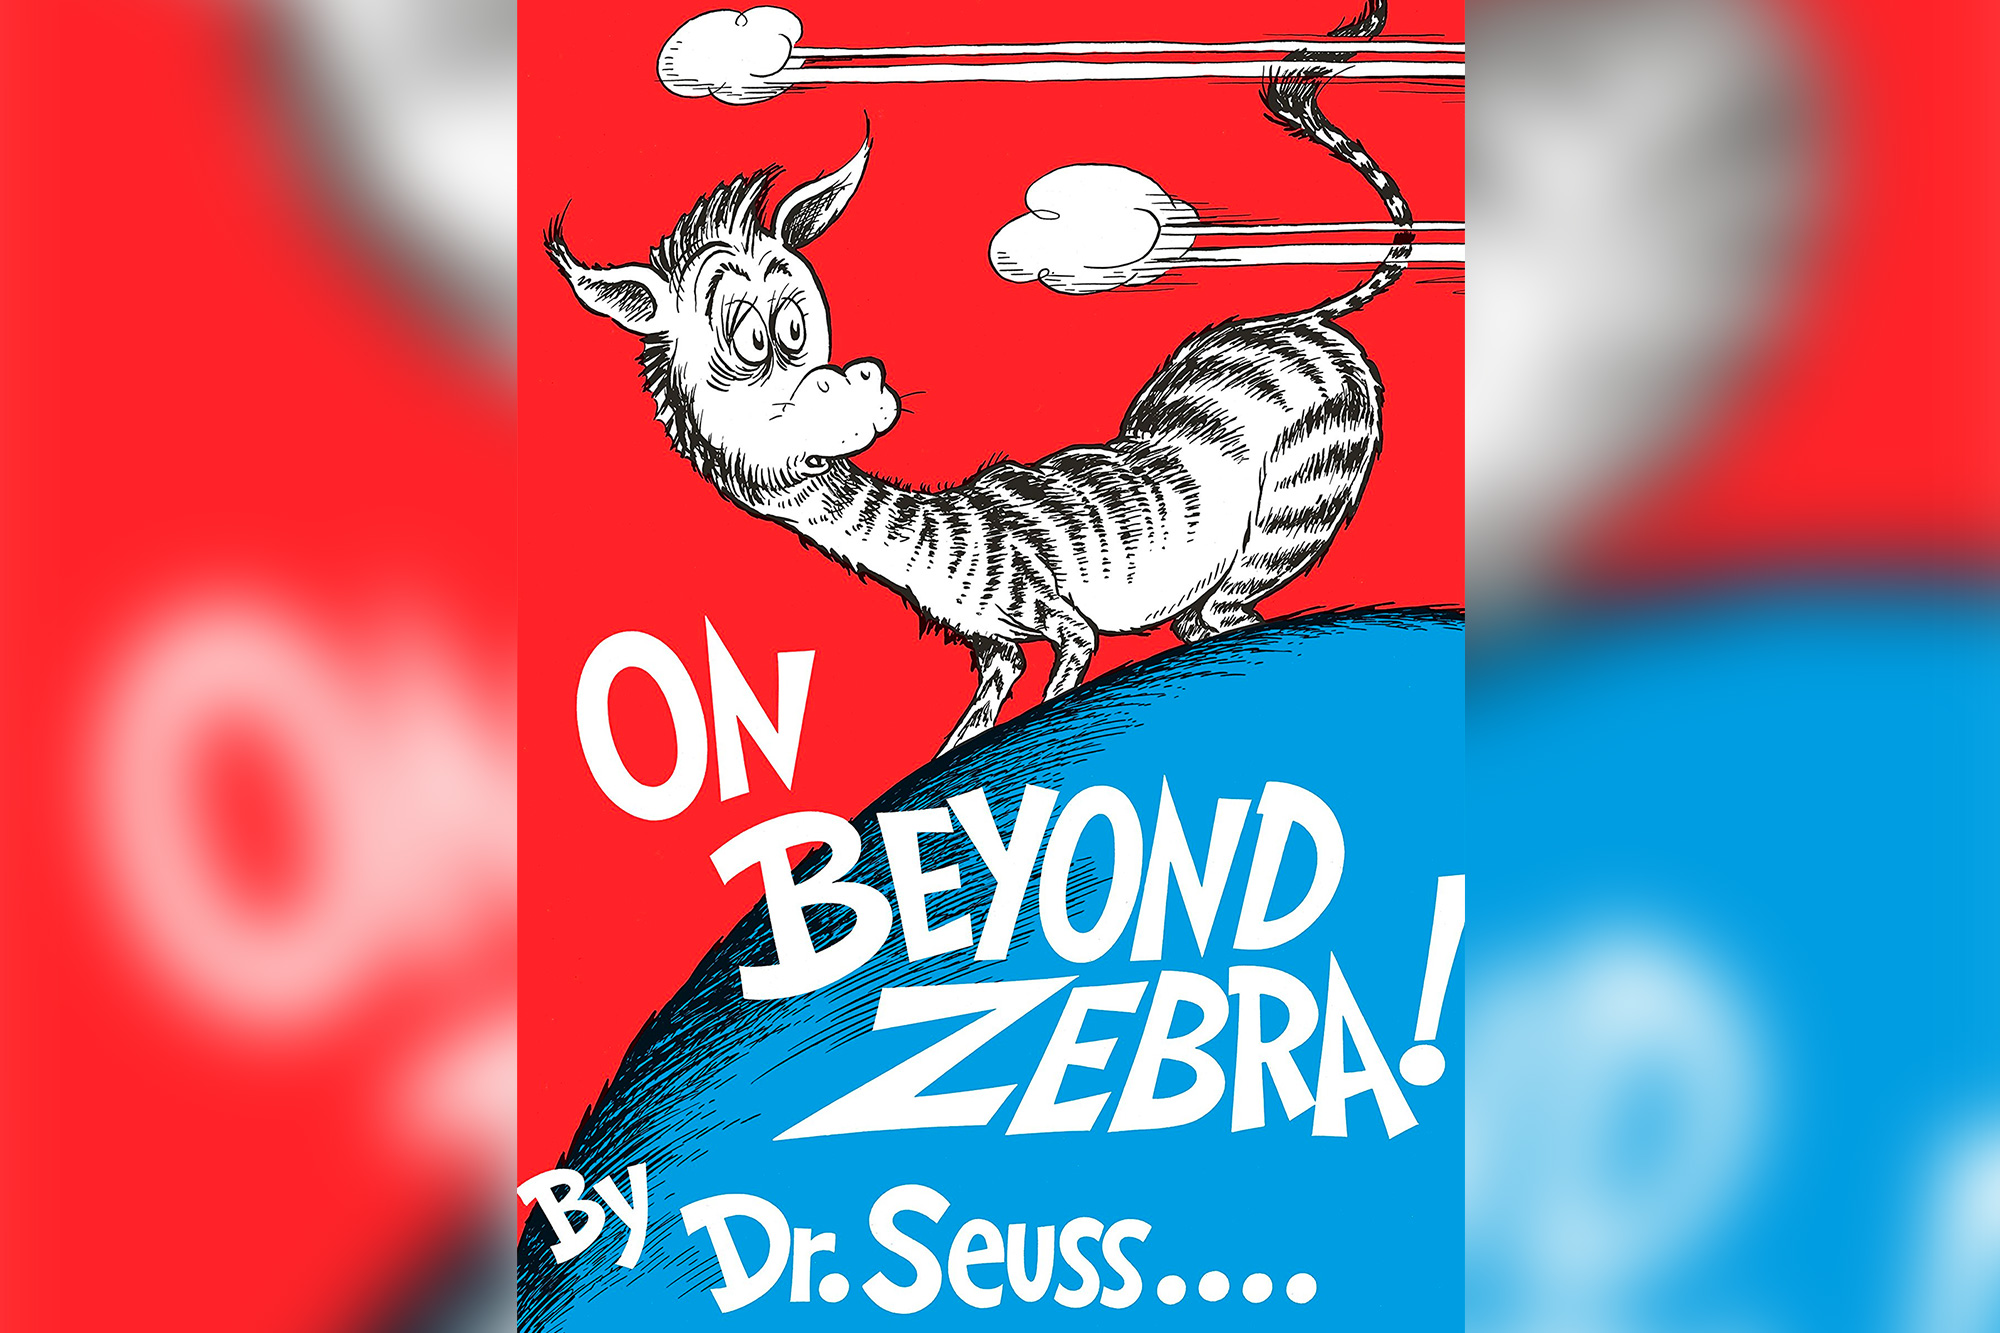 on beyond zebra!